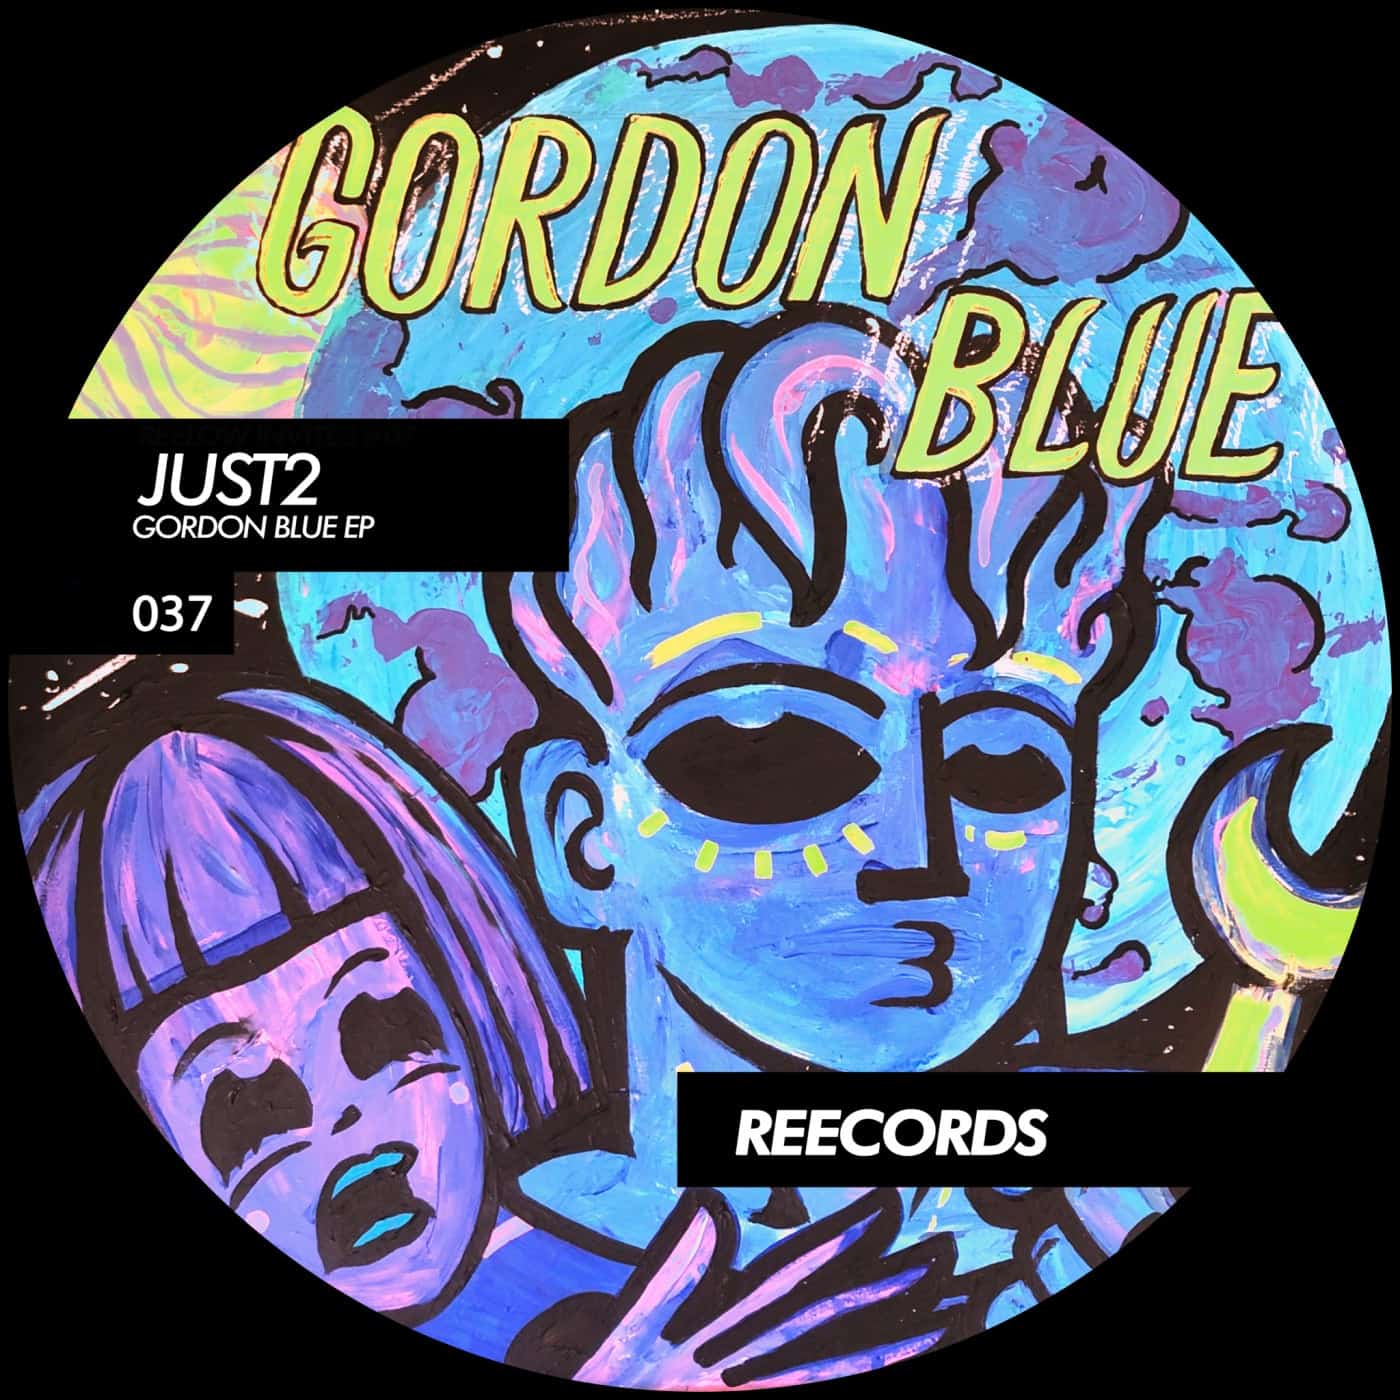 Download JUST2 - Gordon Blue EP on Electrobuzz